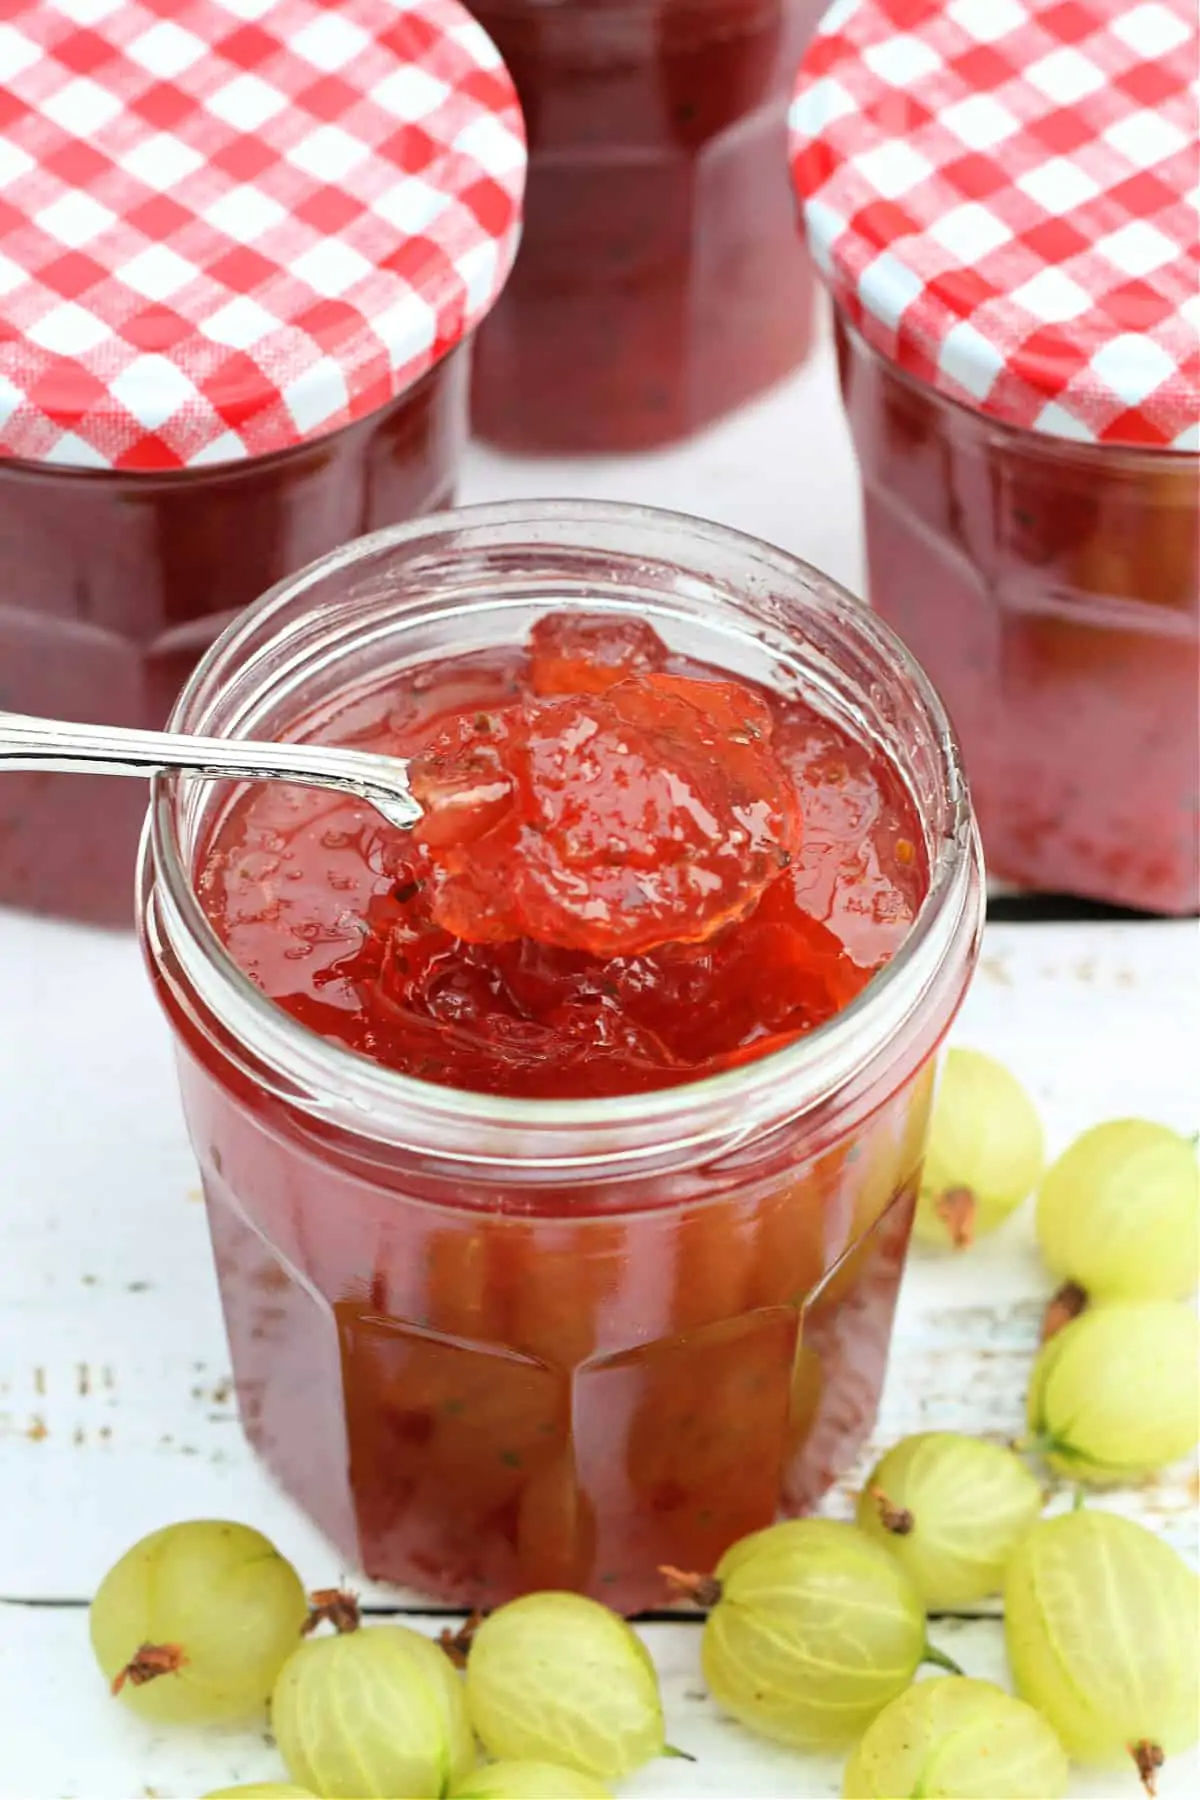 Spoon in jar of jam with gooseberries around it.